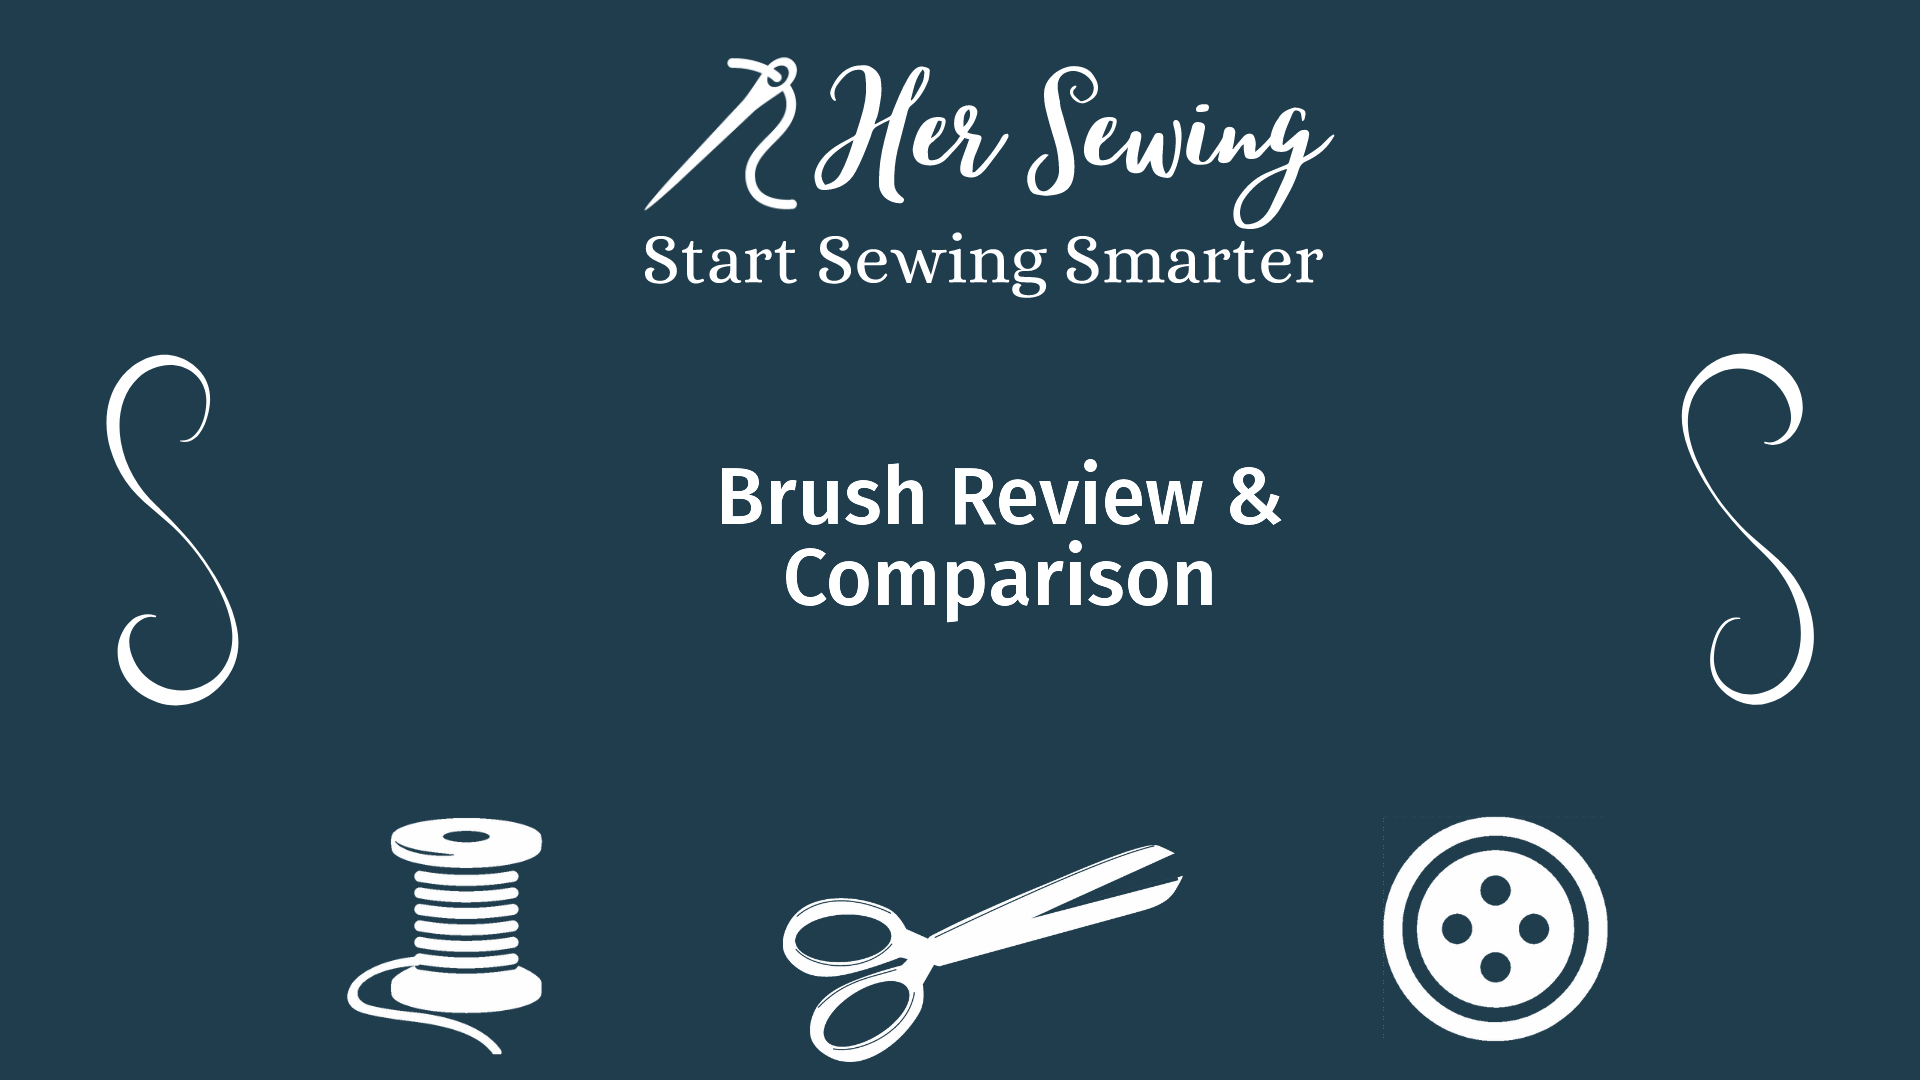 Brush Review & Comparison